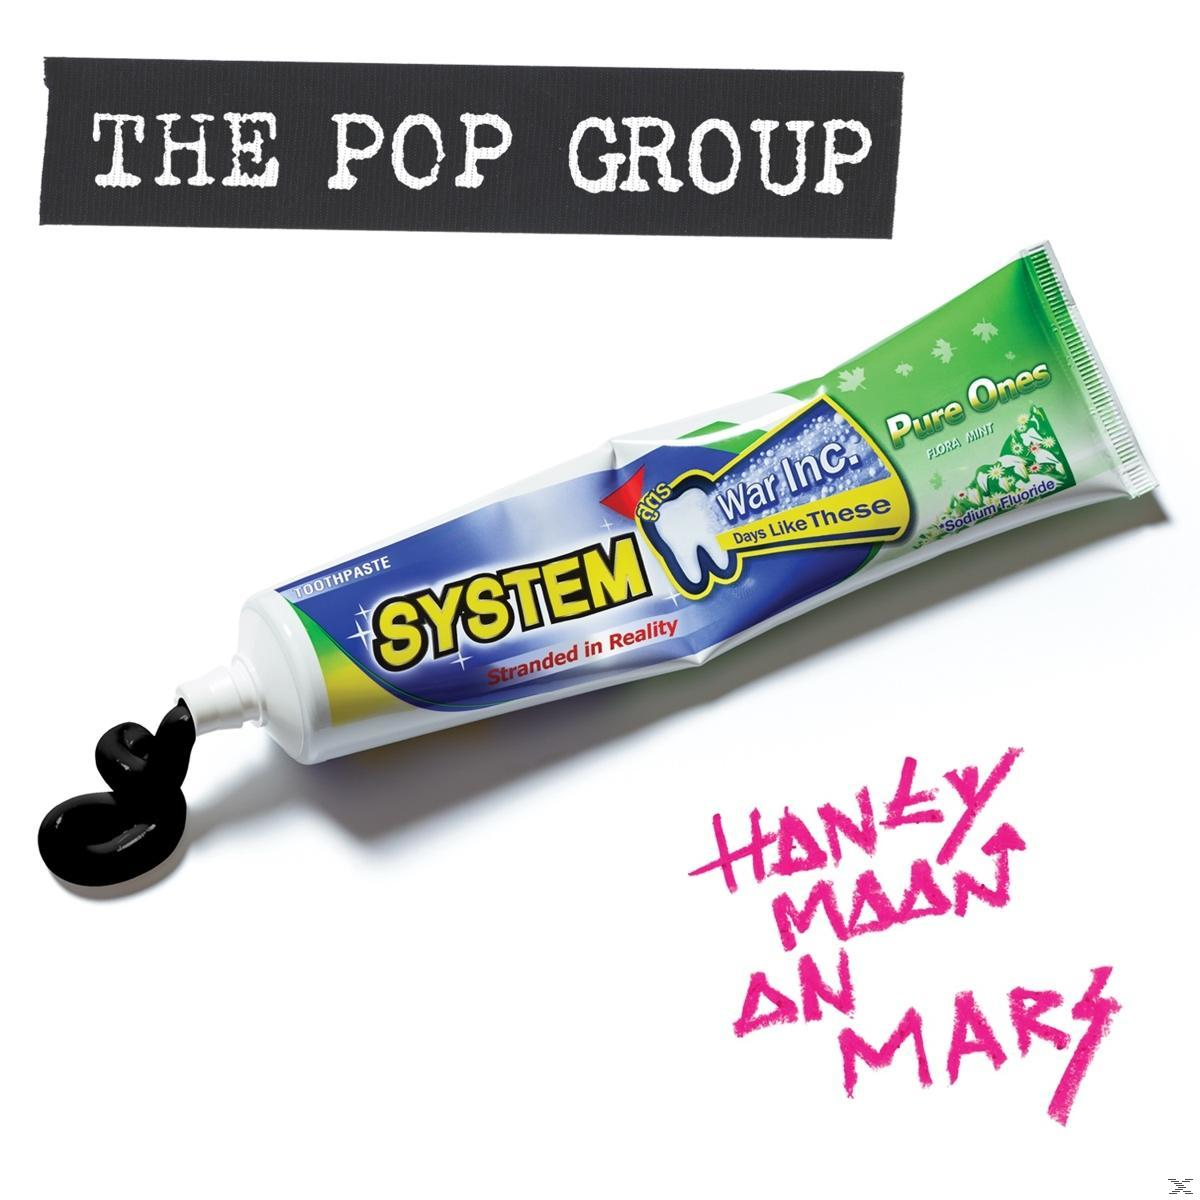 Mars On (Ltd.Deluxe (CD) - Honeymoon Clamshell Box) Group The - Pop